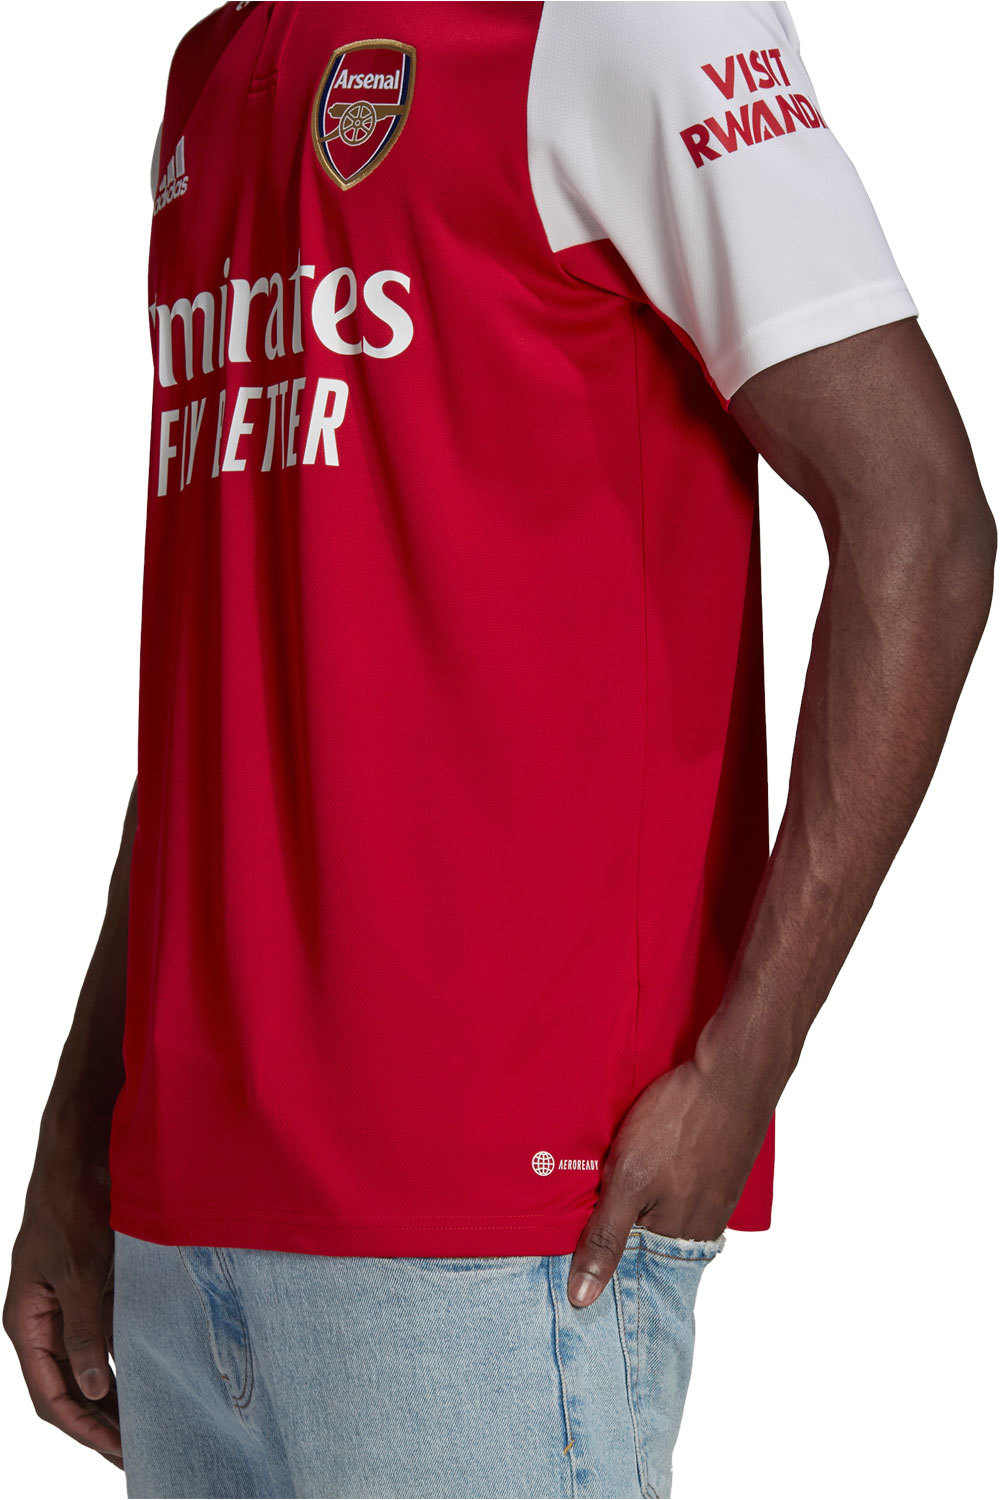 adidas camiseta de fútbol oficiales Arsenal 04